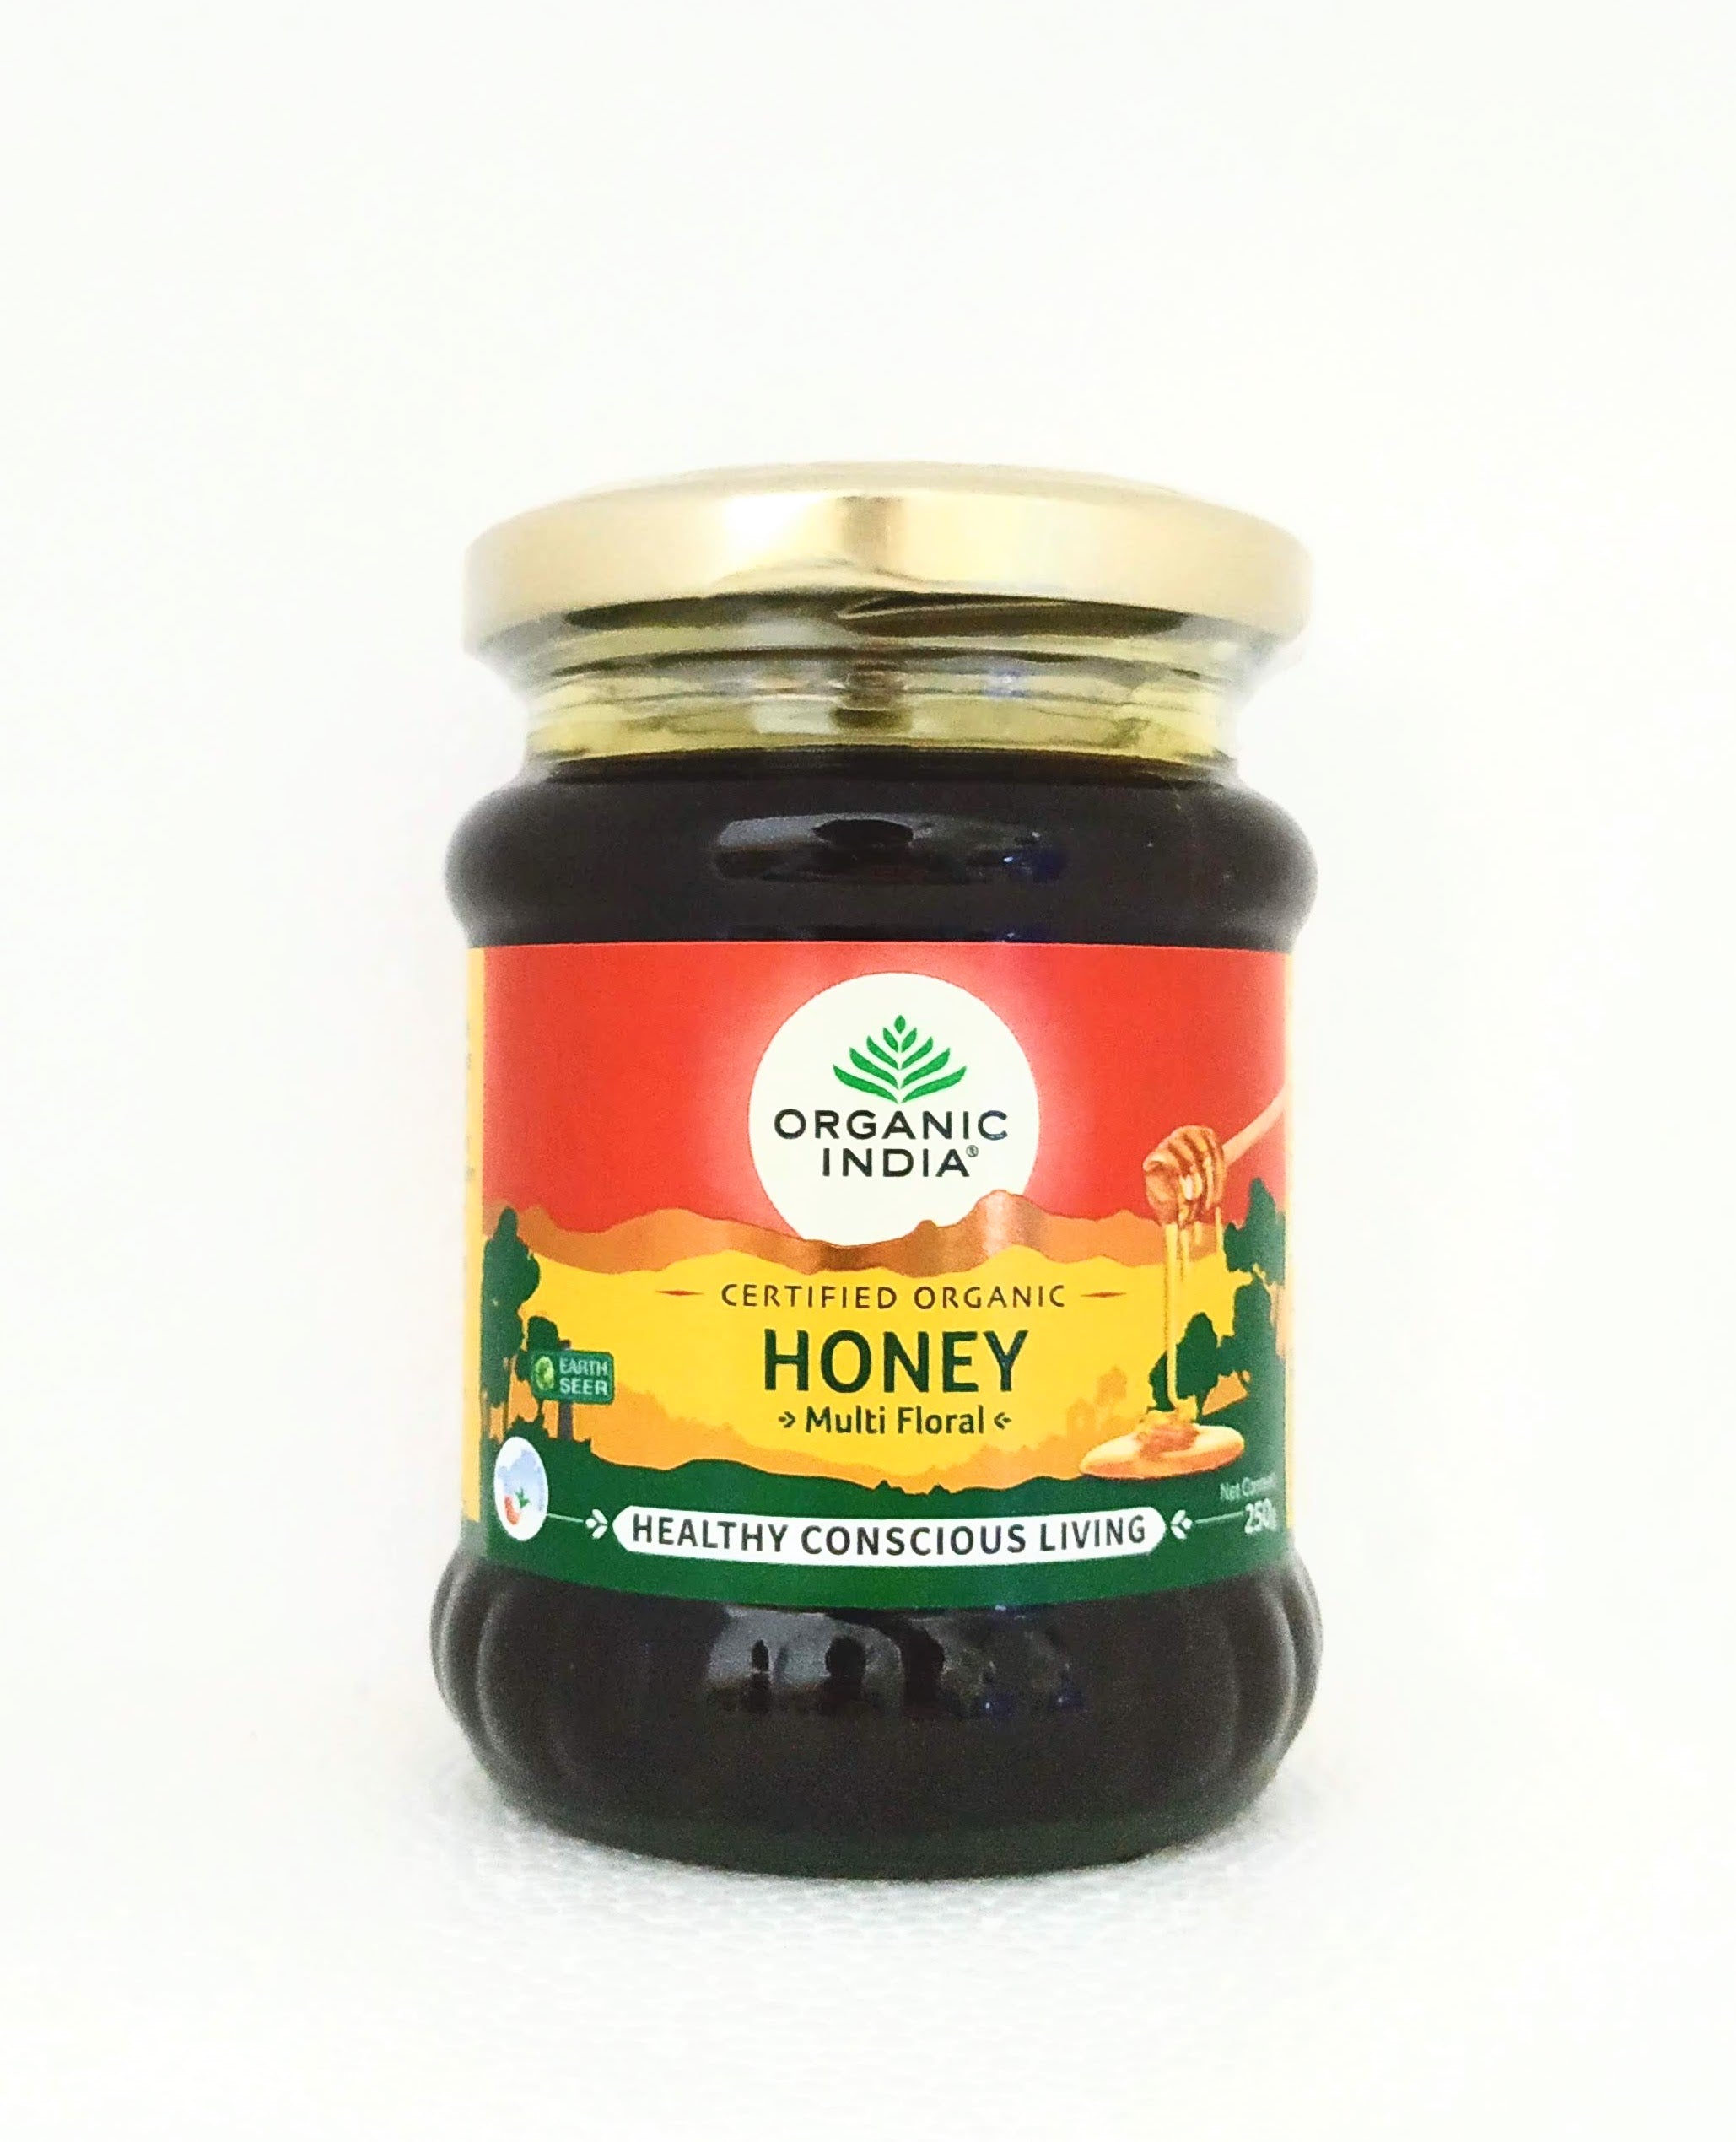 Shop Organic India Honey 250gm at price 195.00 from Organic India Online - Ayush Care